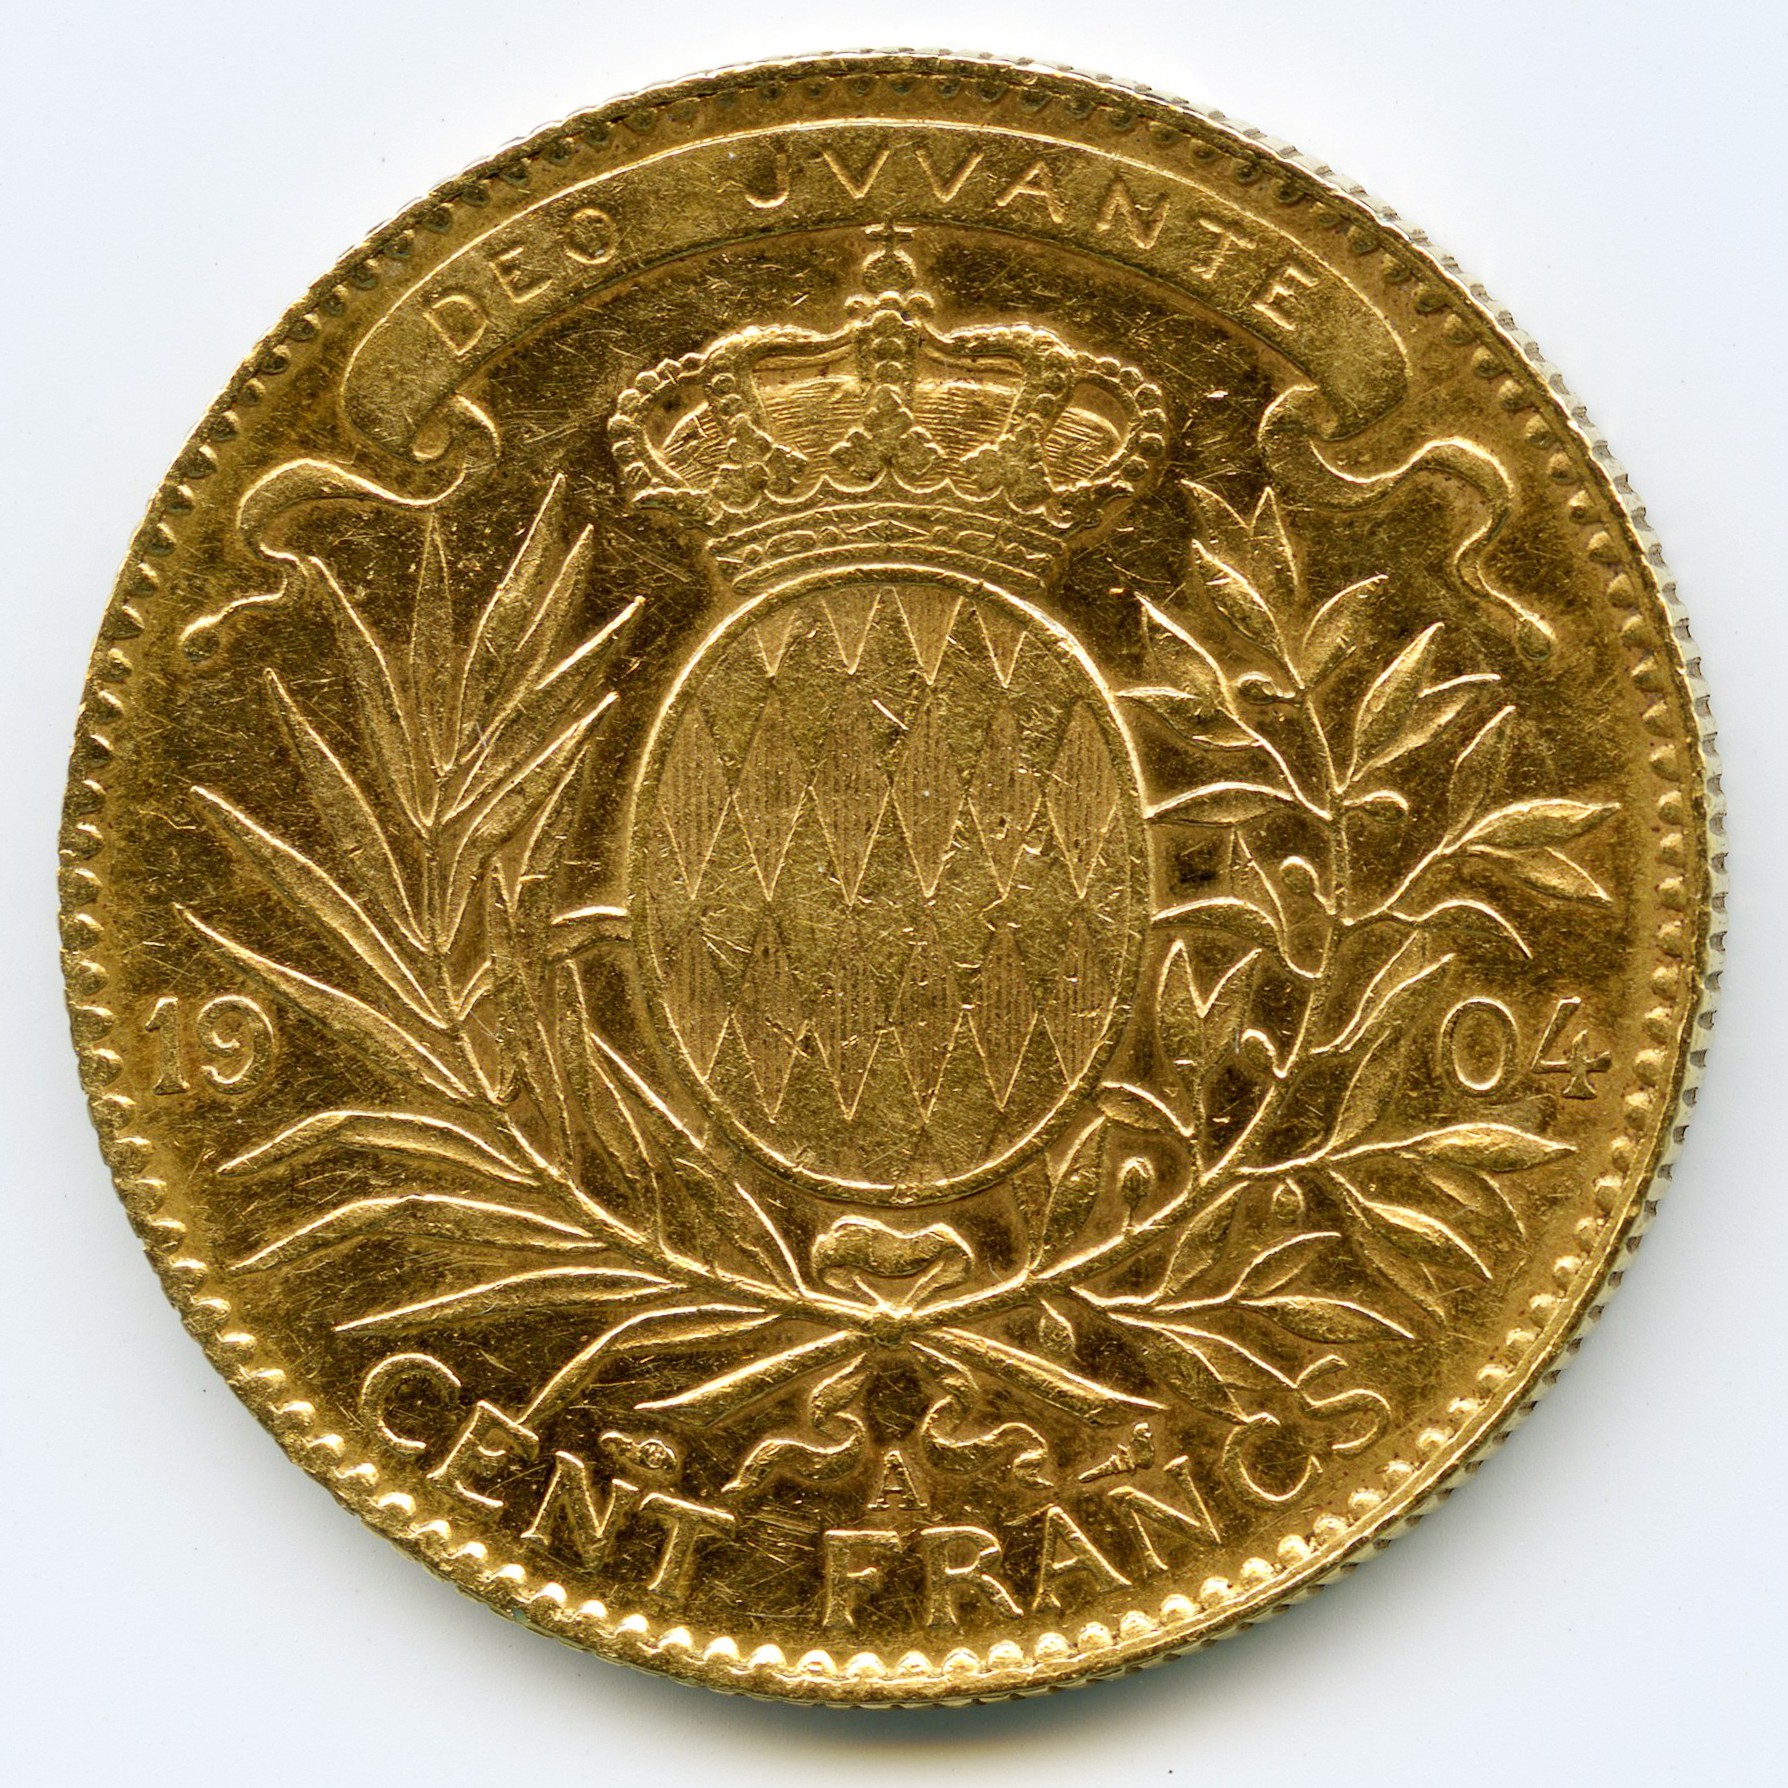 Monaco - 100 Francs - 1904 A revers